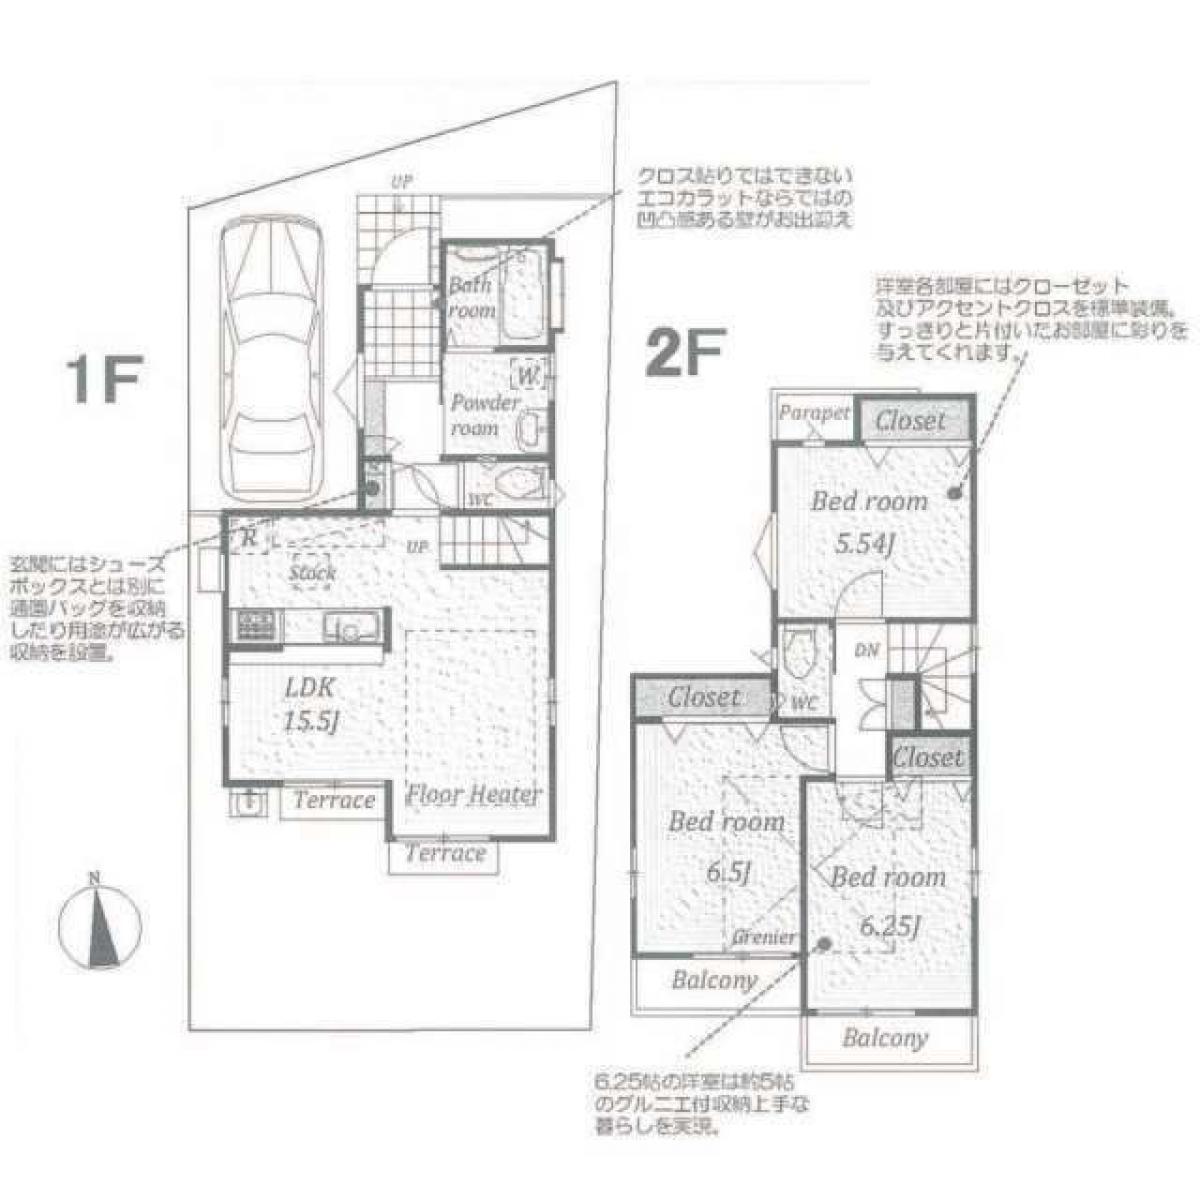 Picture of Home For Sale in Kokubunji Shi, Tokyo, Japan